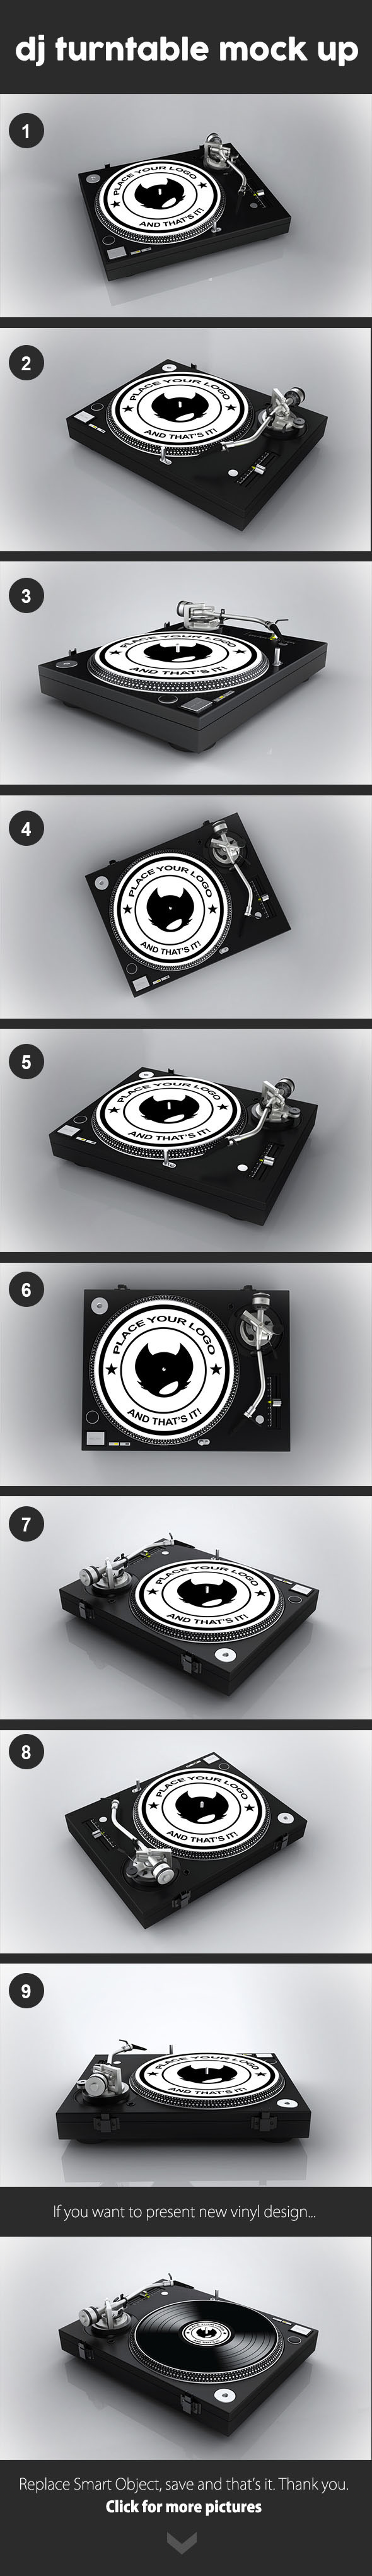 Audio background black DANCE   disco dj dj turntable electronic Entertainment isolate Label mock up mock-up Mockup Nightlife